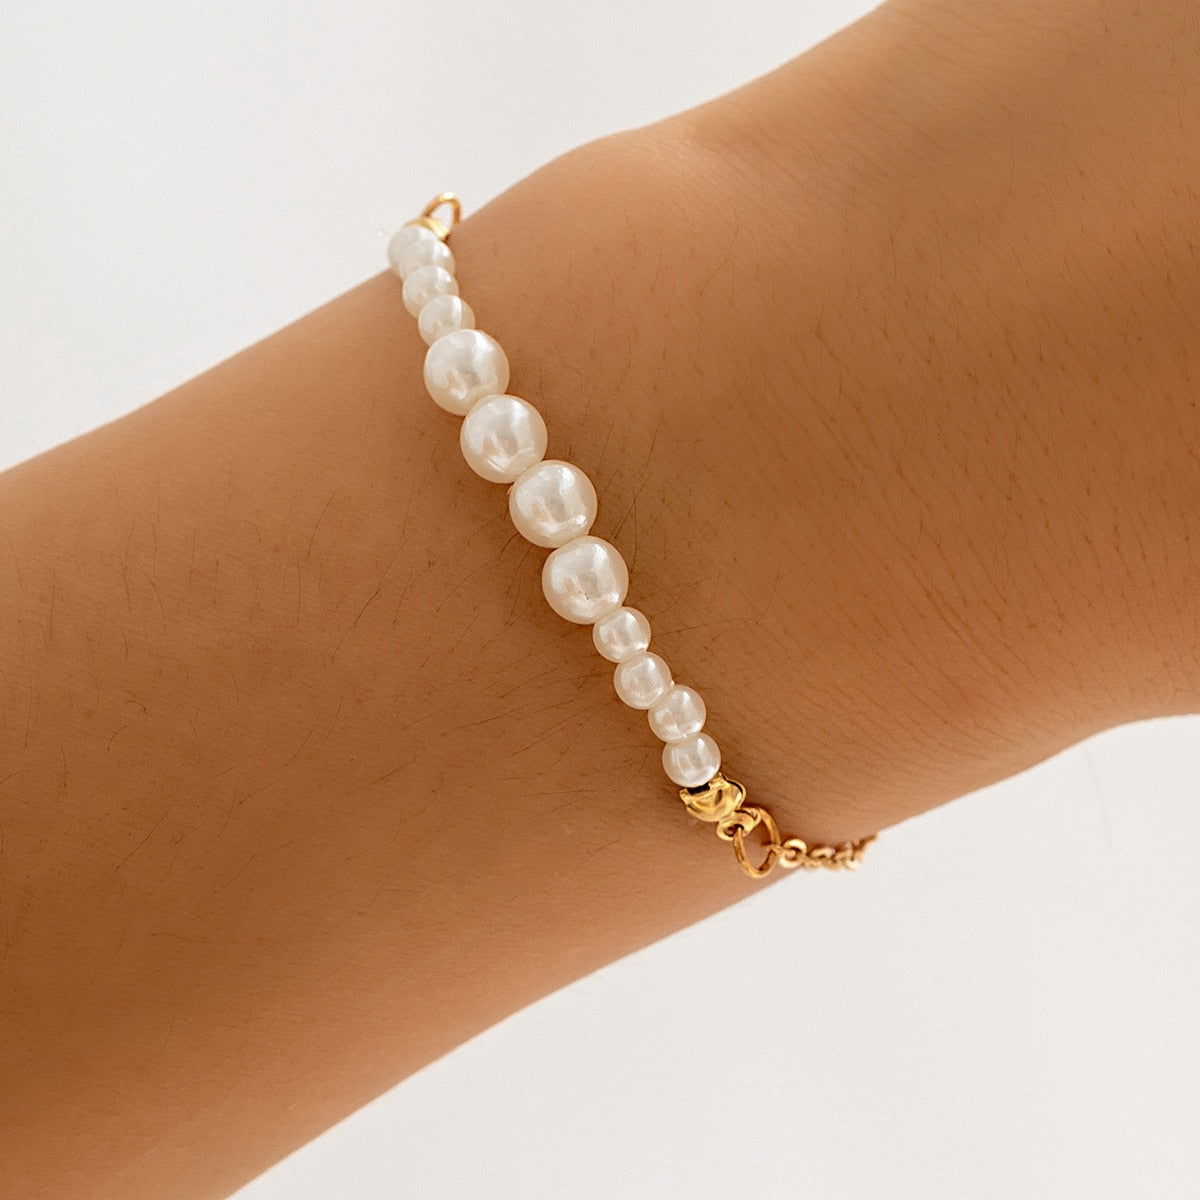 Maytrends Fashion Imitation Pearl Beads Metal Chain Bracelet For Women Elegant Simple Metal Bracelet Wedding Jewelry Gift